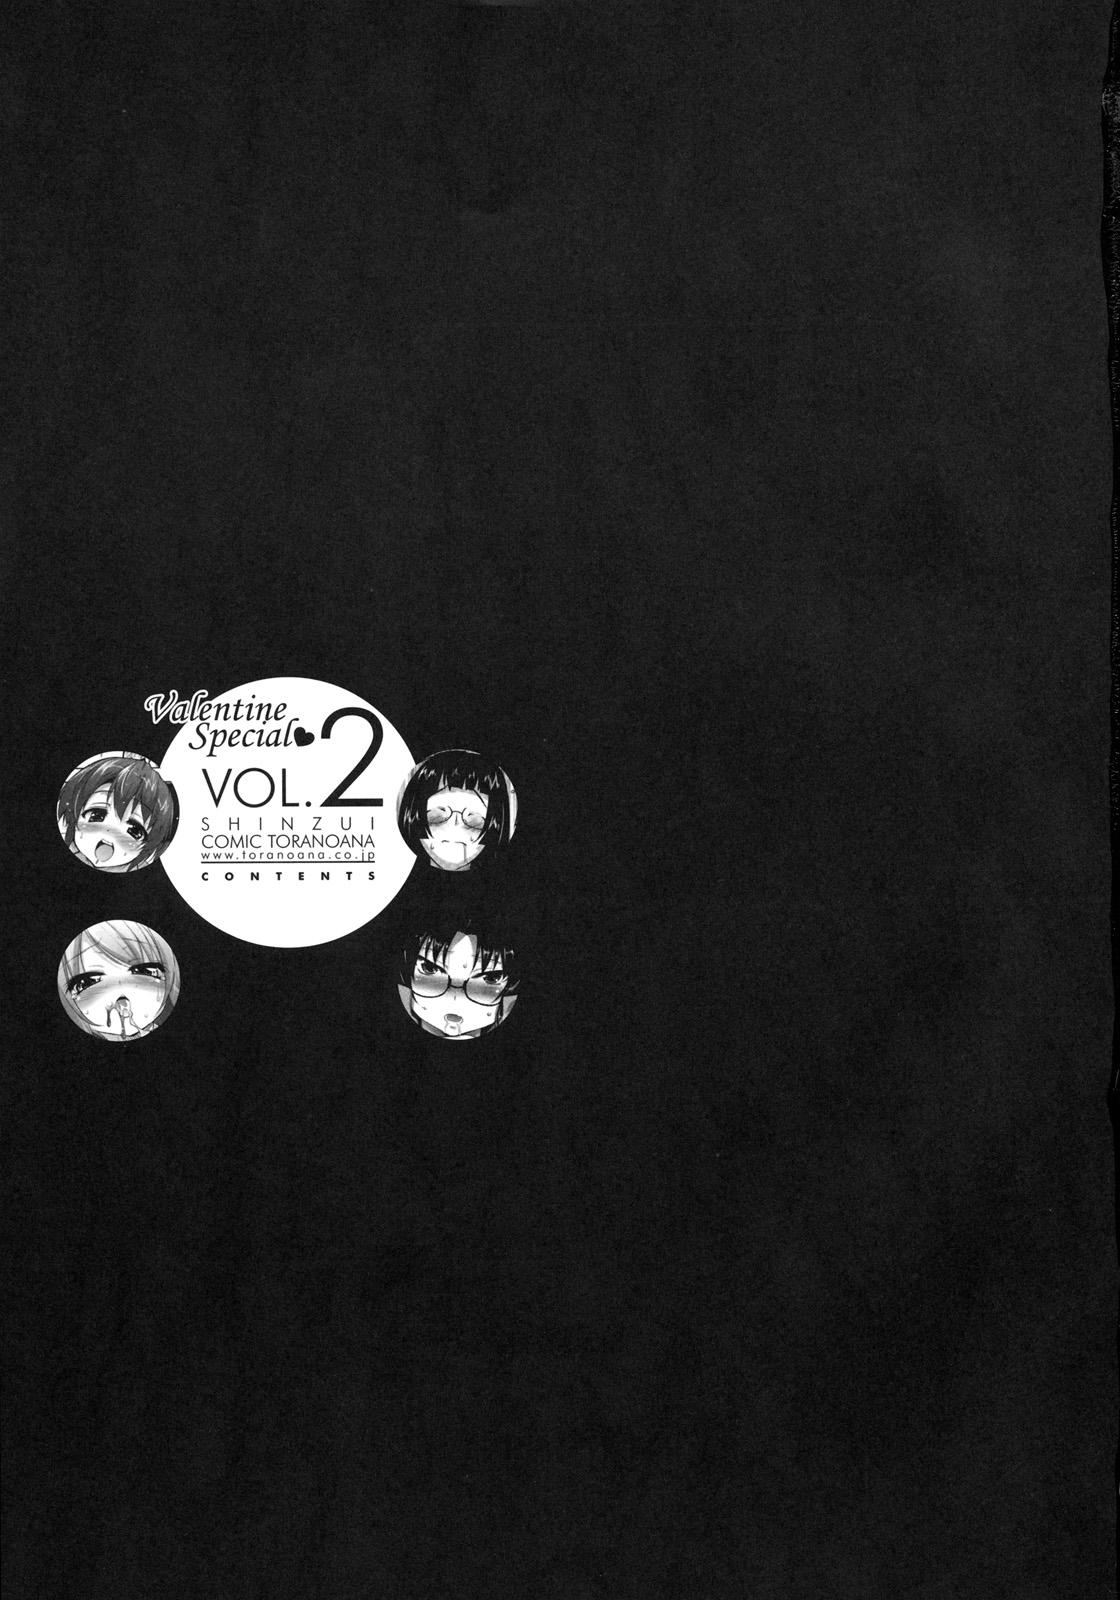 Shinzui Valentine Special Vol. 2 2